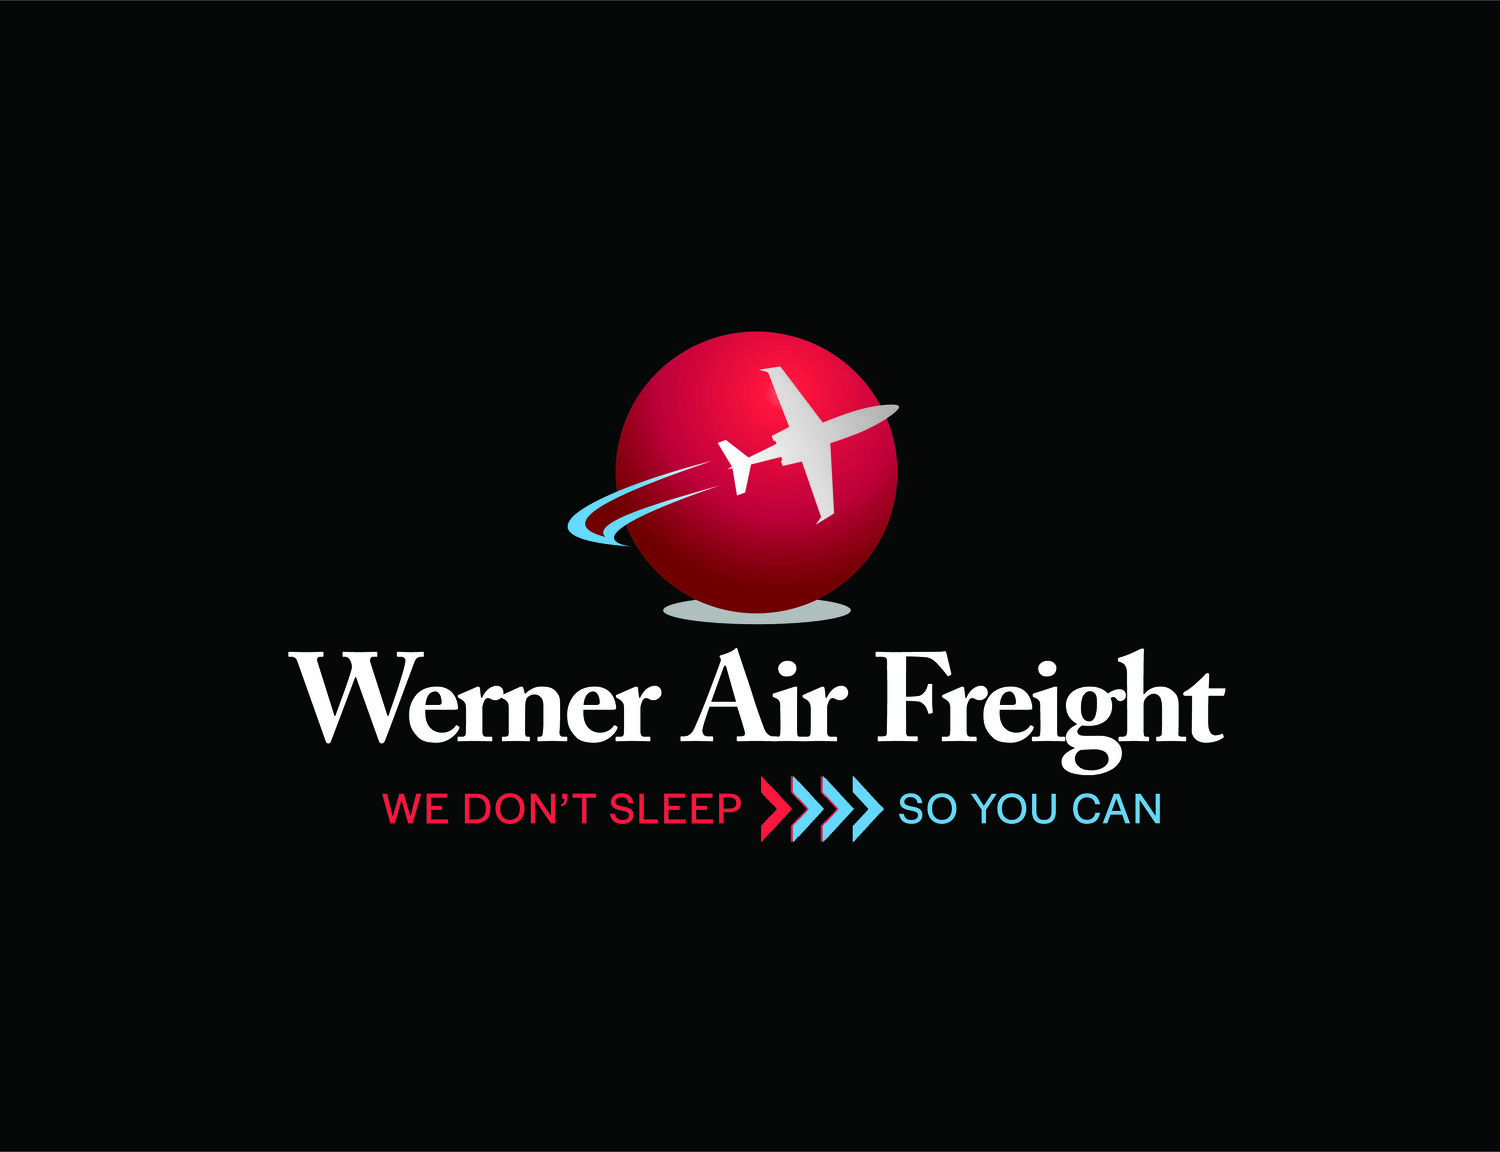 Werner Air Freight